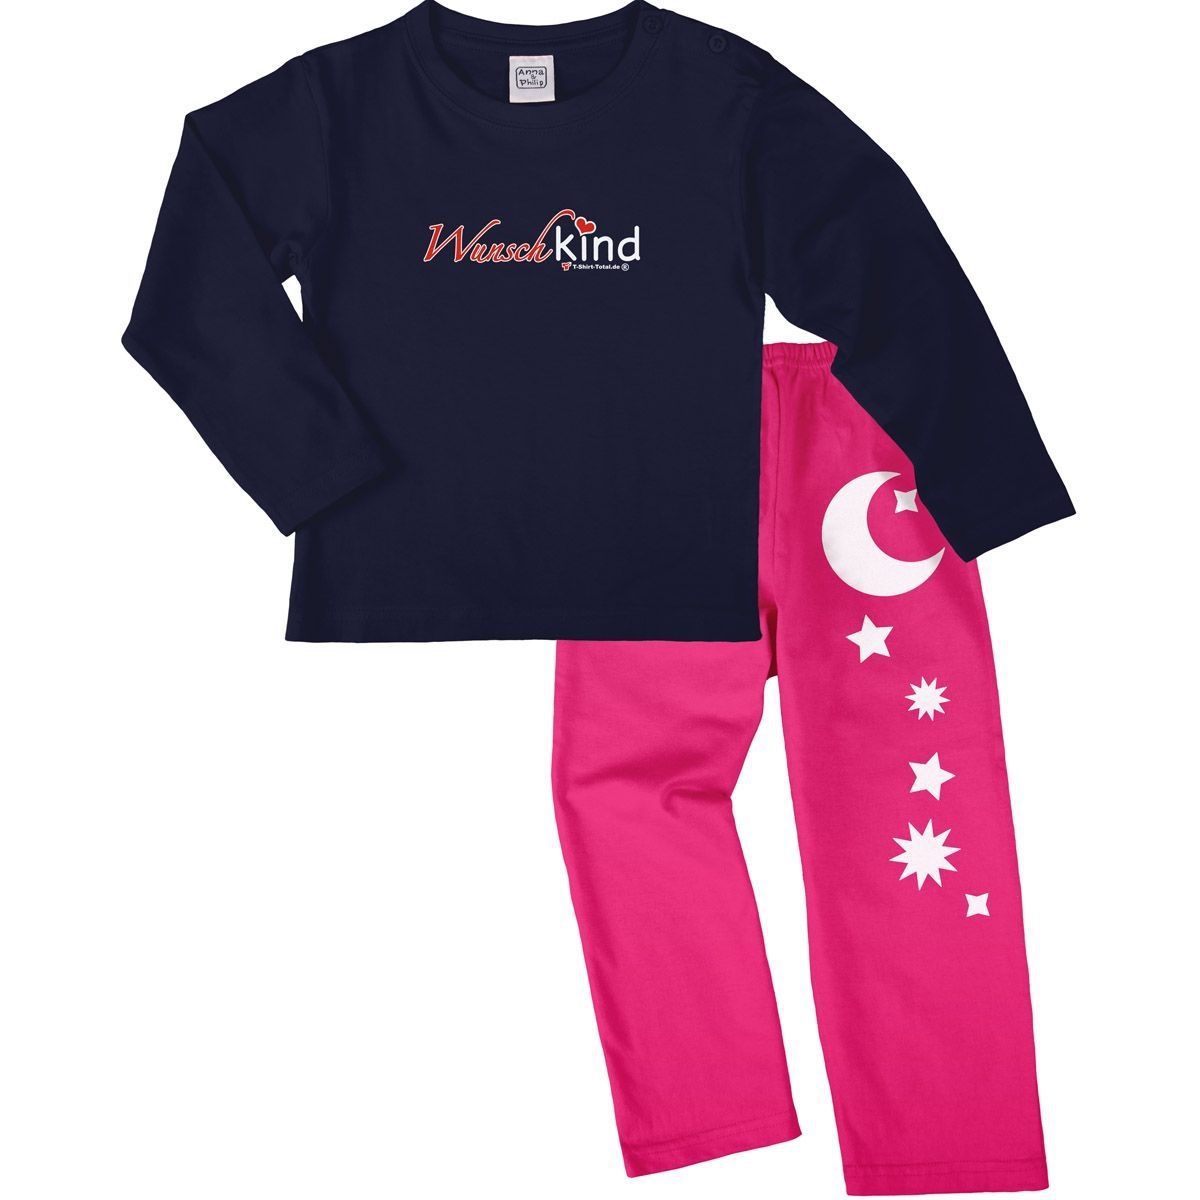 Wunschkind Pyjama Set navy / pink 80 / 86